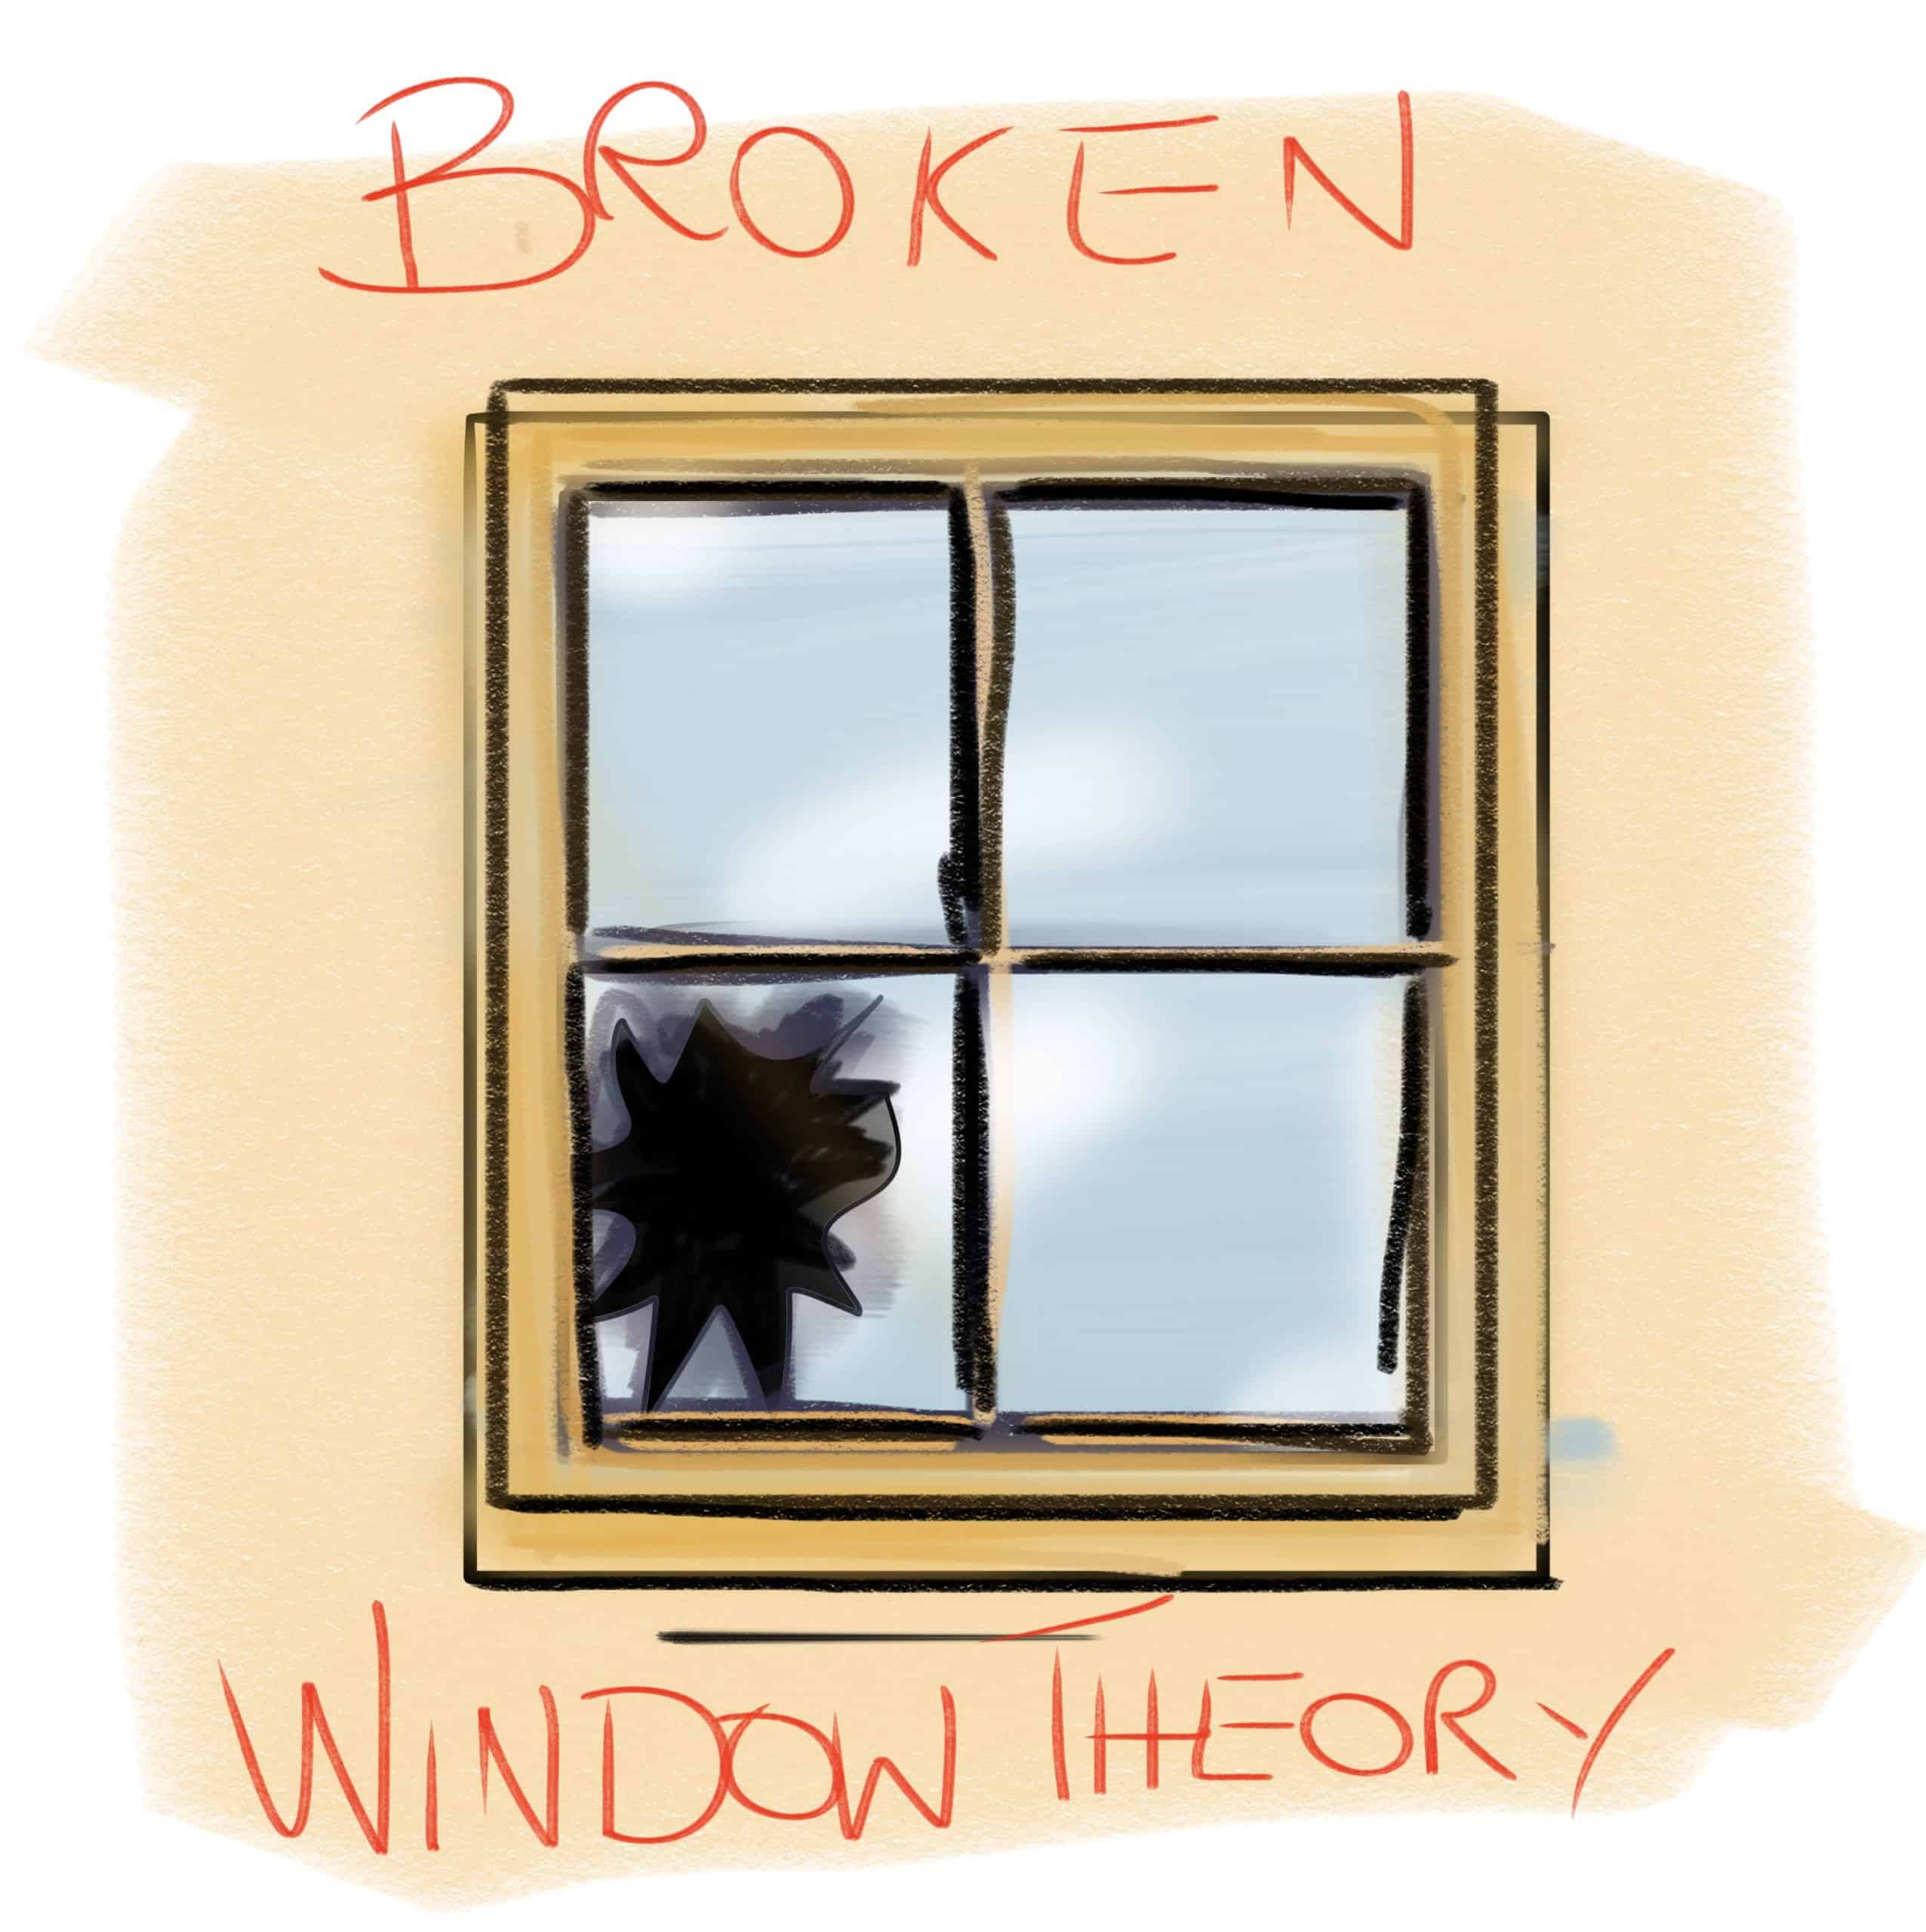 broken window theory terminology